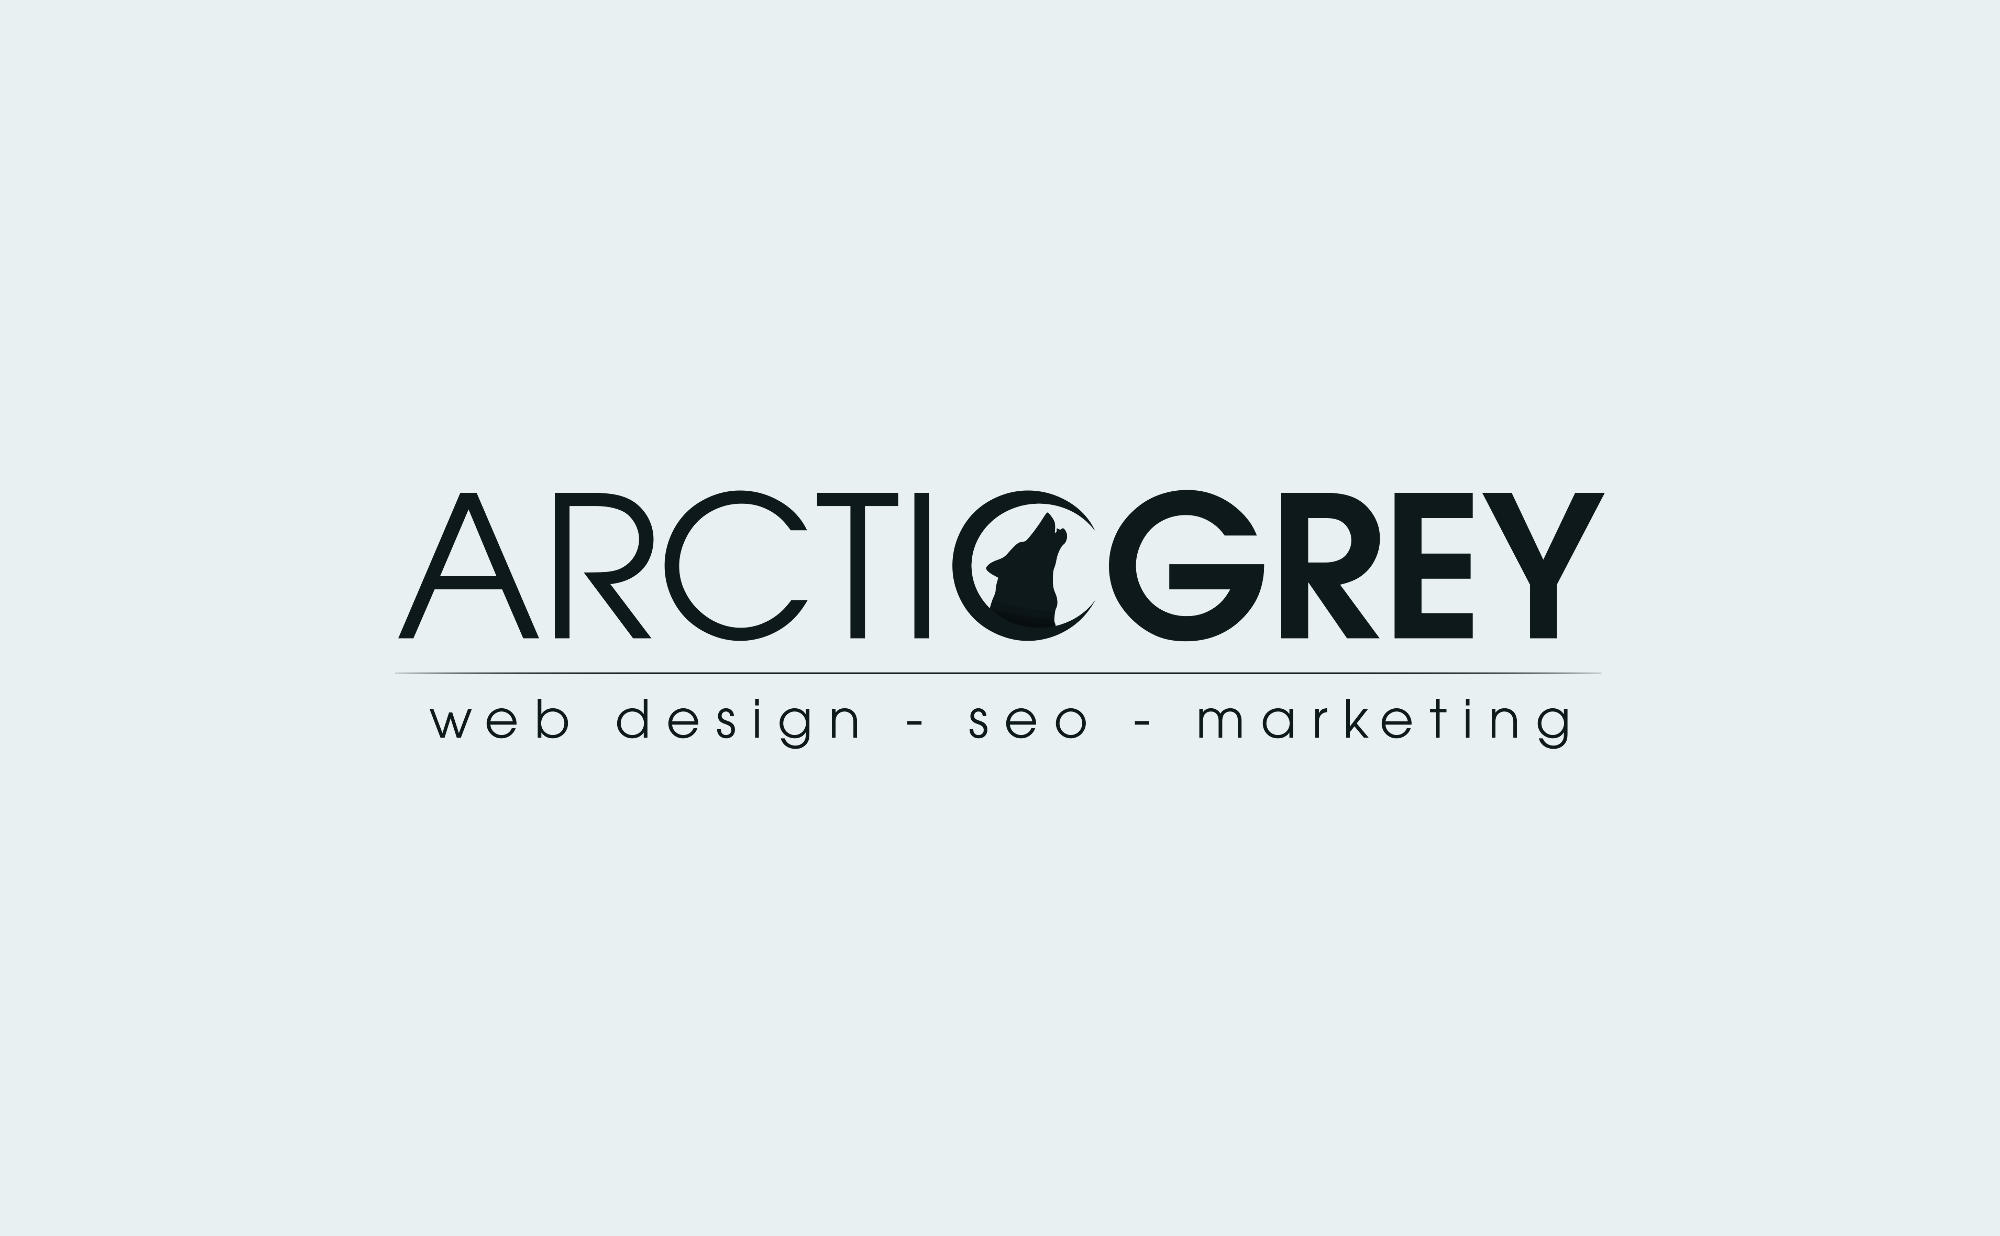 Best SEO Web Design Agency Logo: Arctic Grey Inc